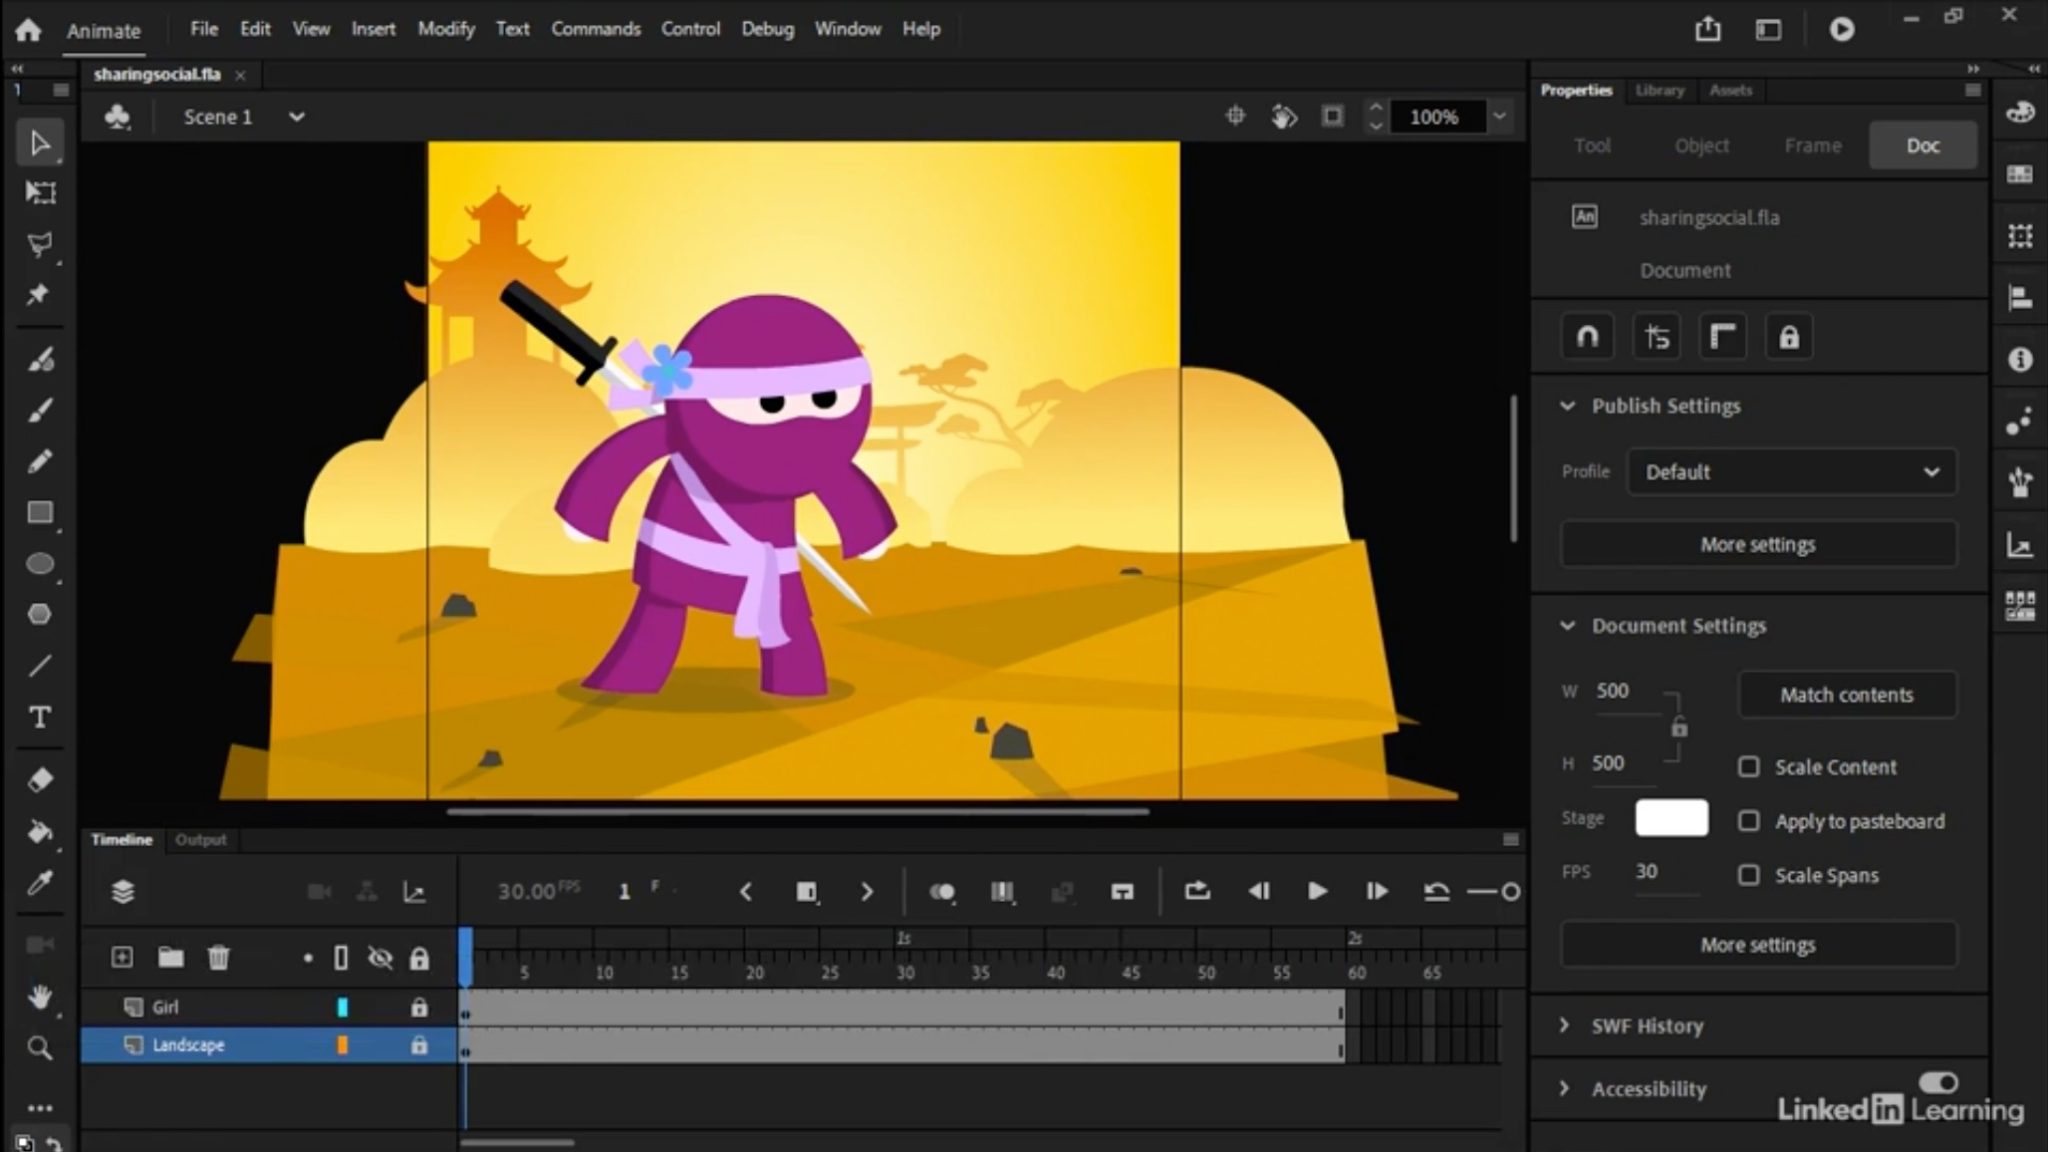 download the last version for windows Adobe Animate 2024